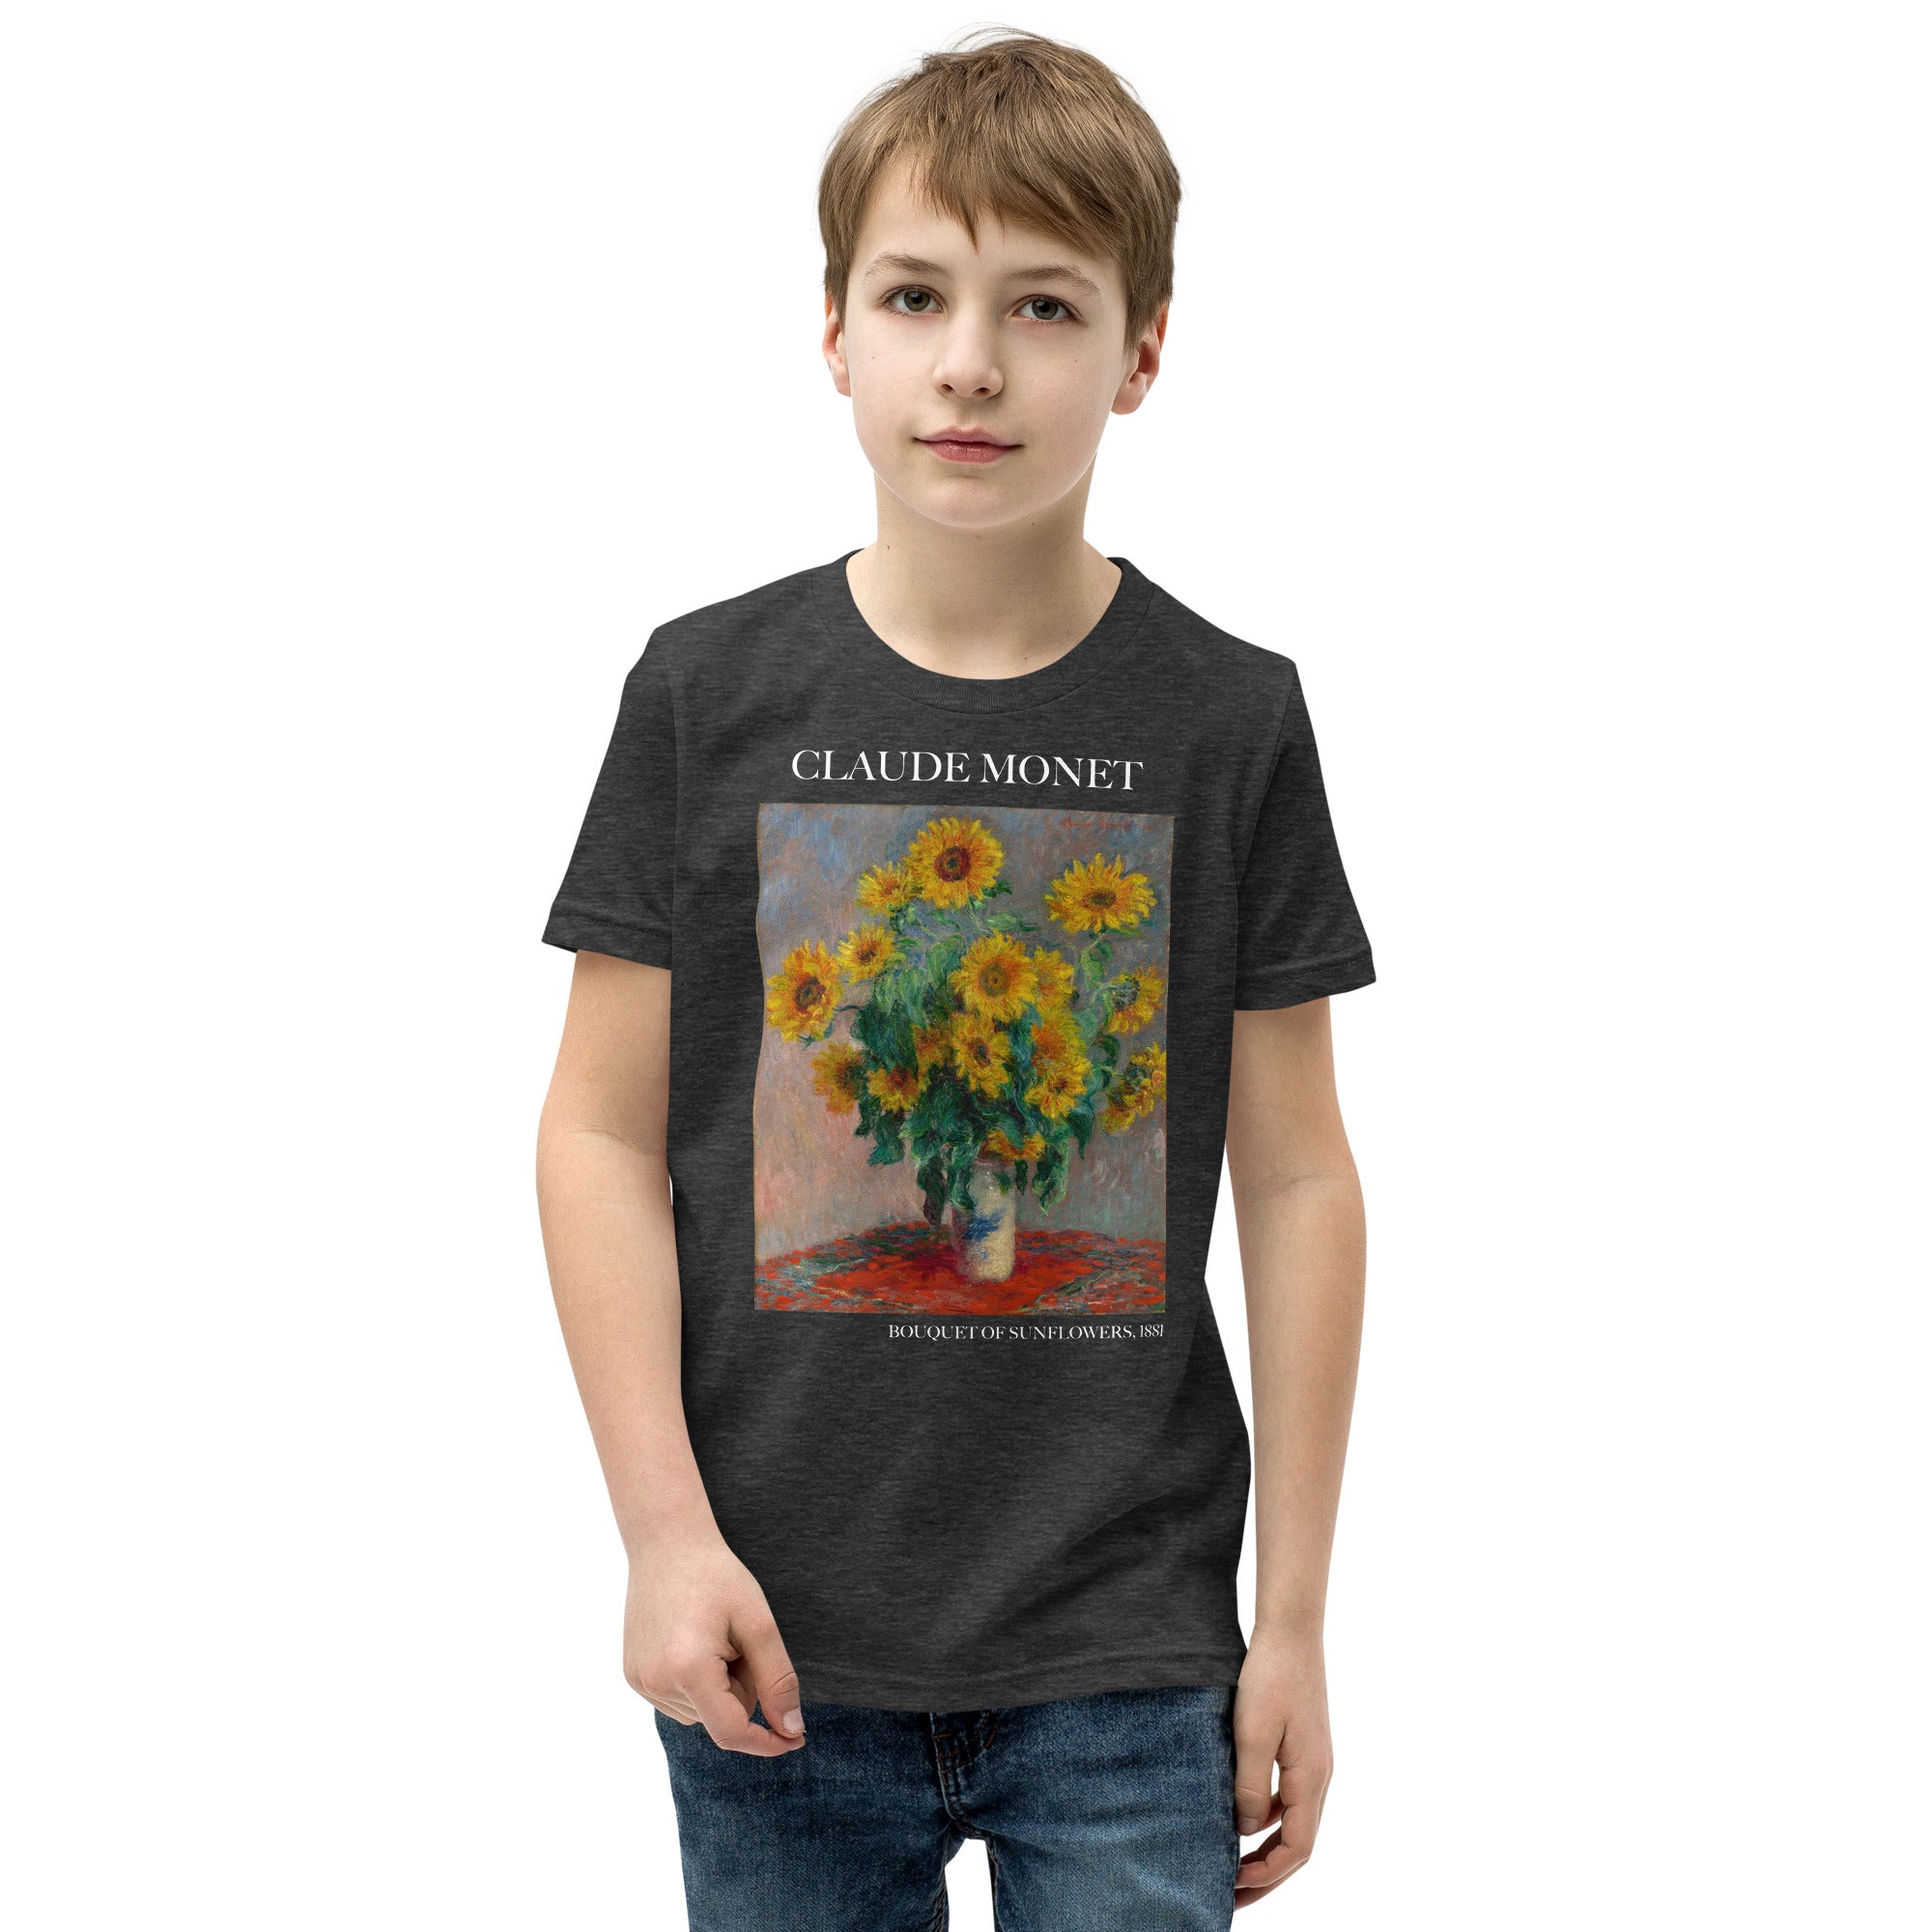 Claude Monet 'Bouquet of Sunflowers' Famous Painting Short Sleeve T-Shirt | Premium Youth Art Tee